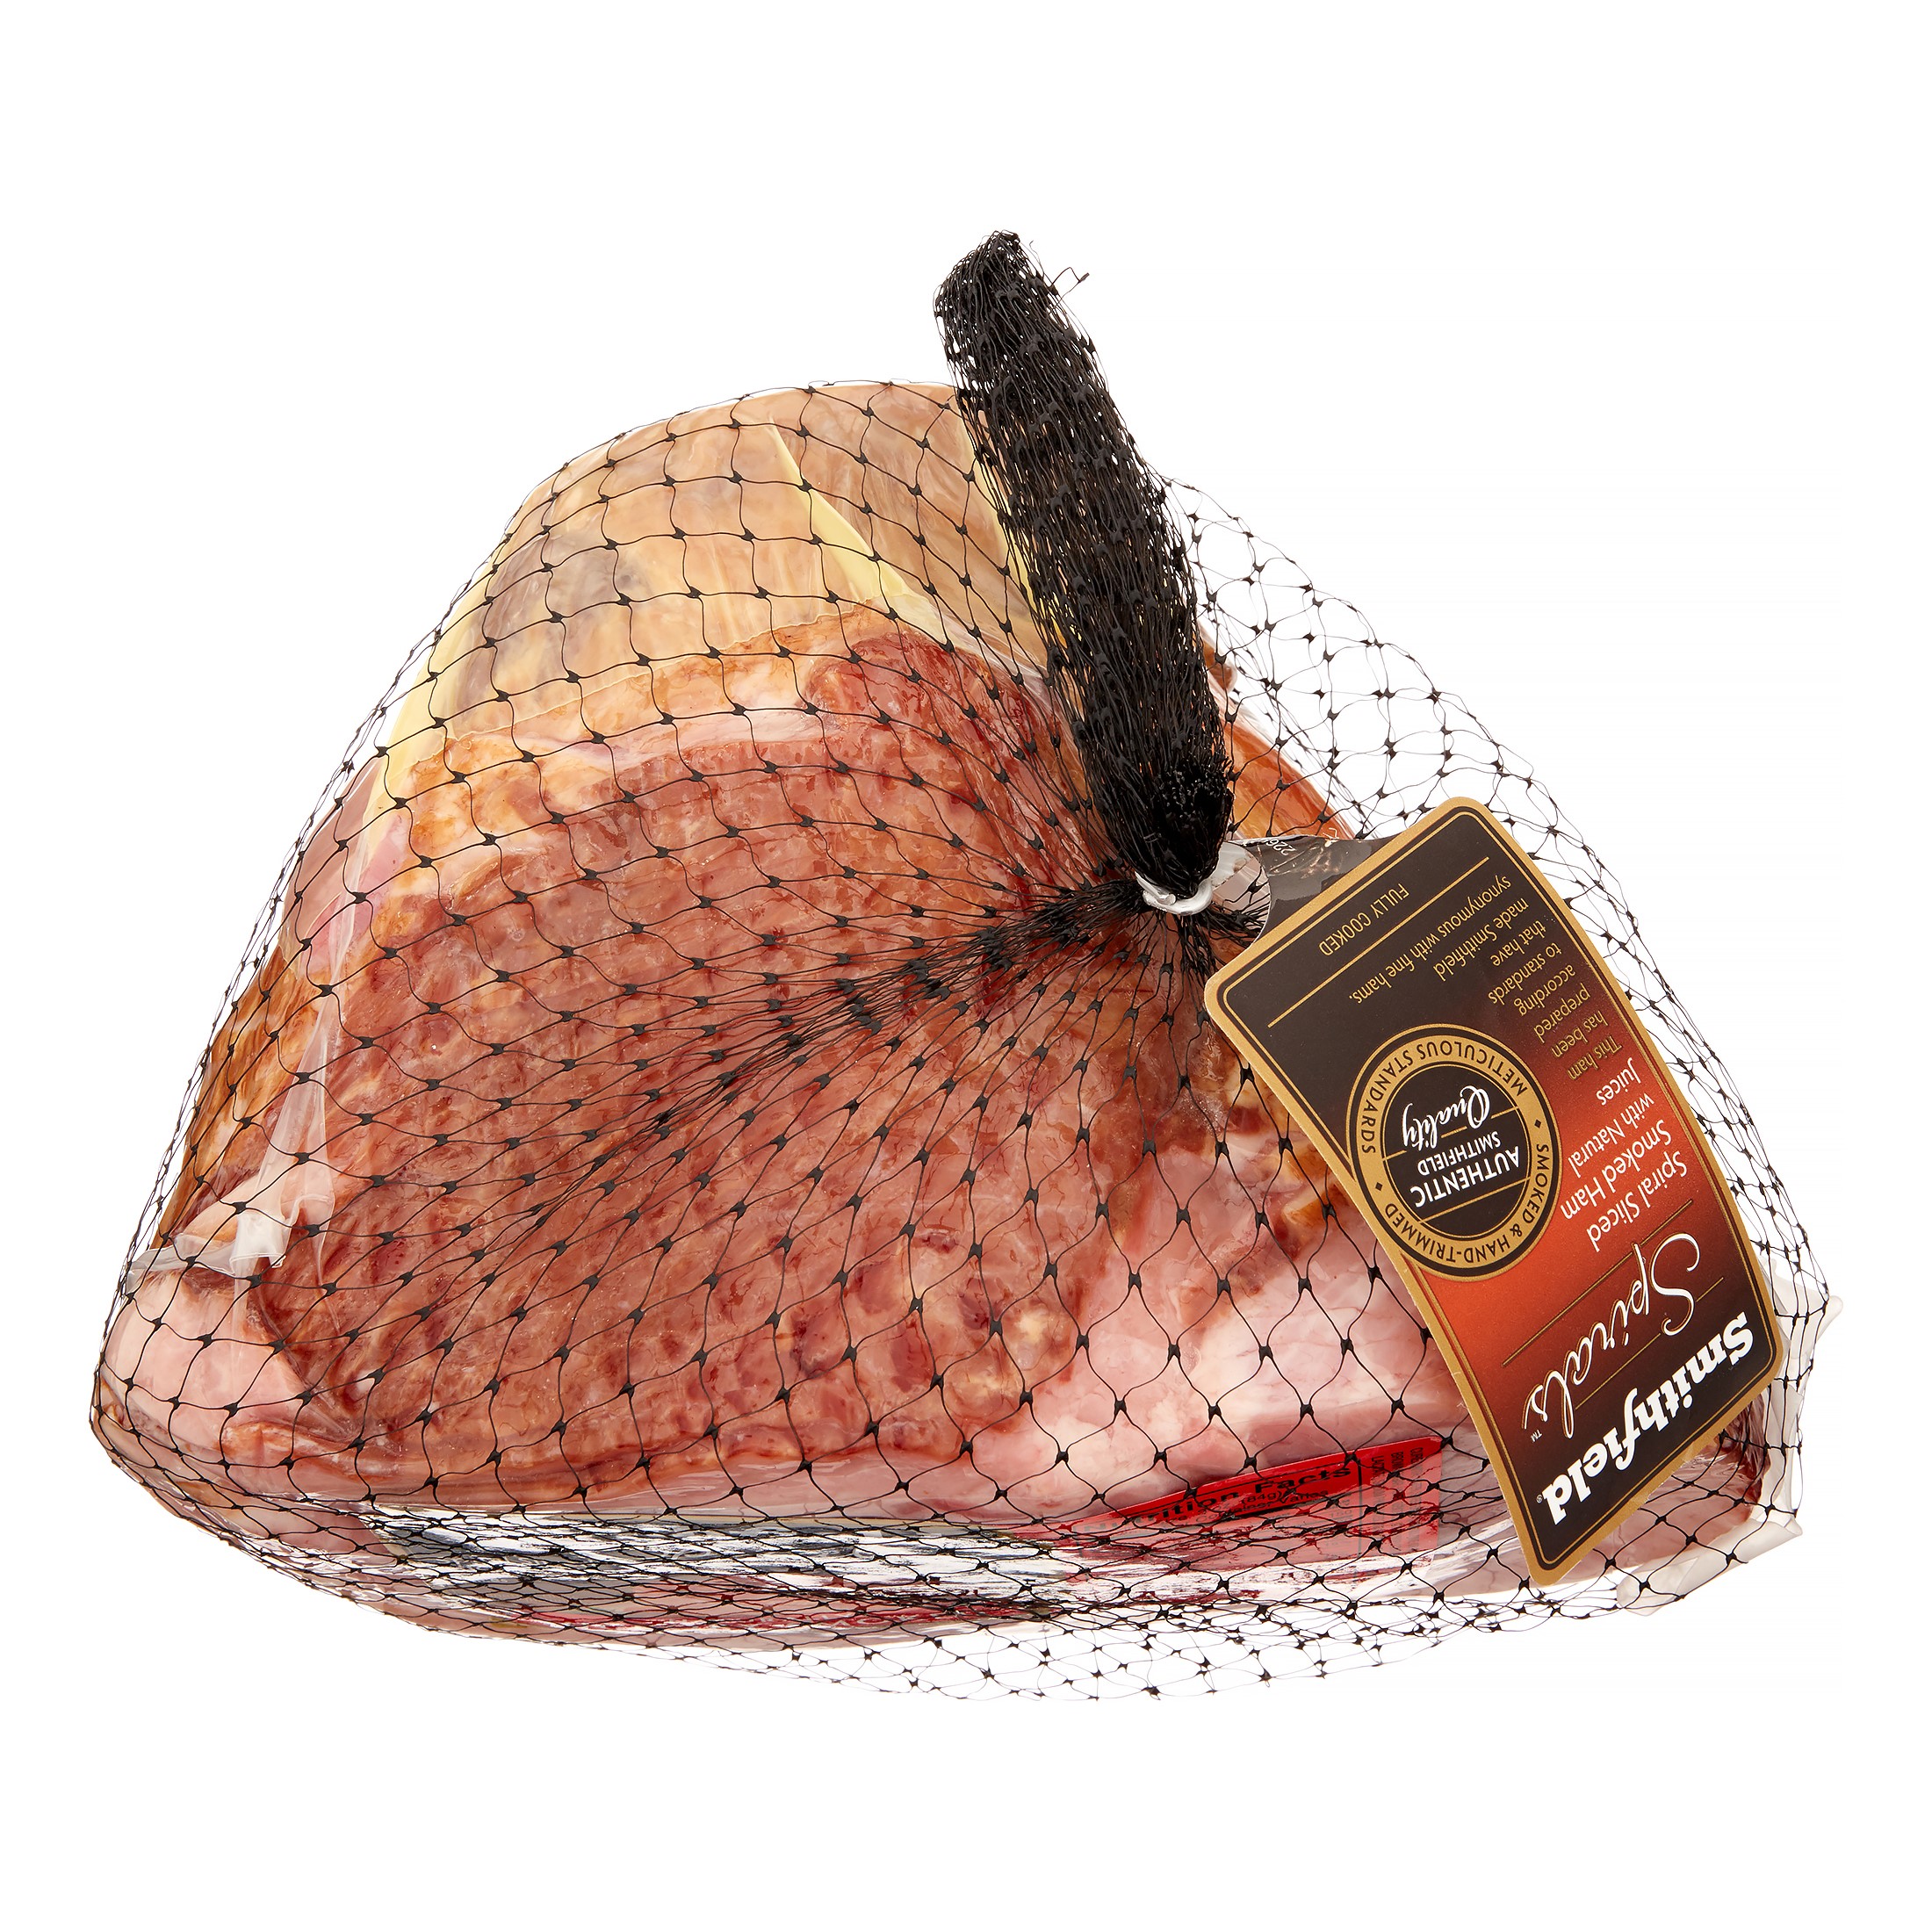 Smithfield Hickory Smoked Spiral Sliced Ham, 10.35-10.43 lb - image 4 of 8